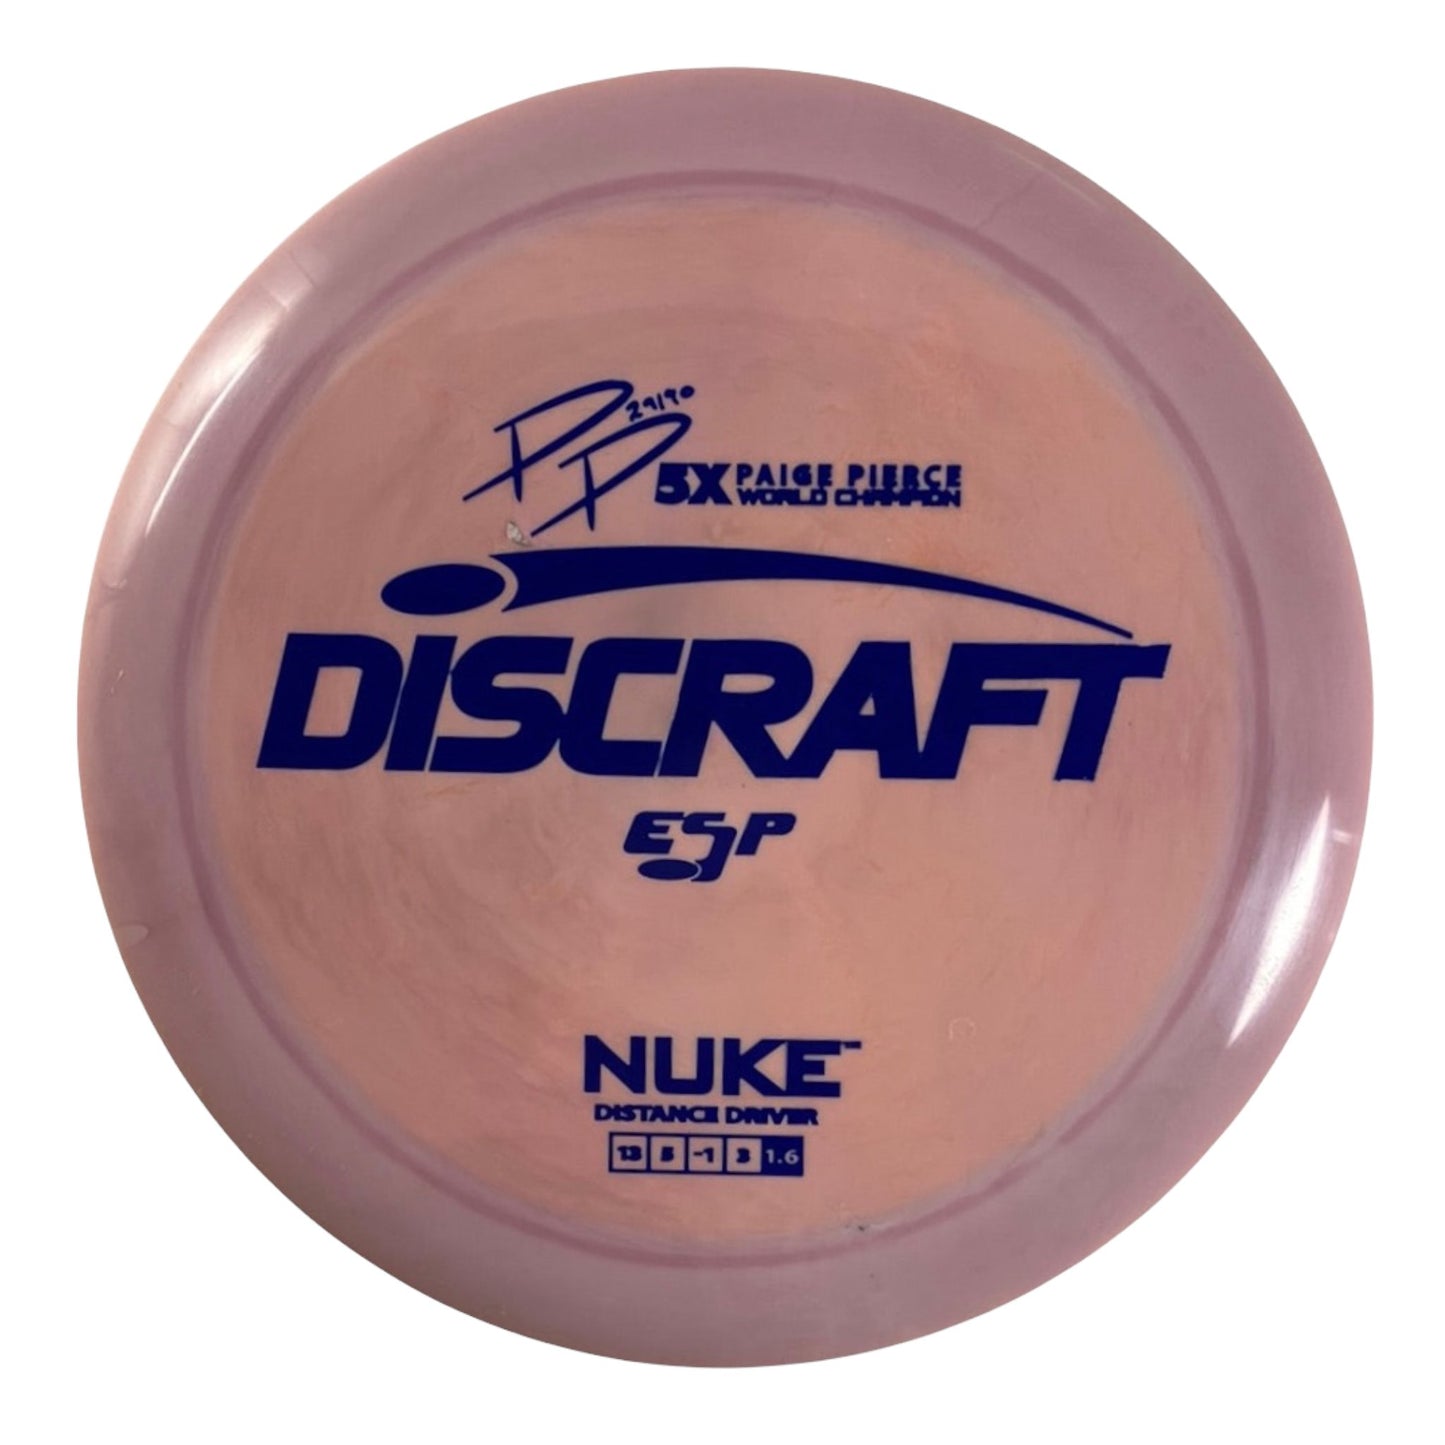 Discraft Nuke | ESP | Pink/Blue 173g (Paige Pierce) Disc Golf